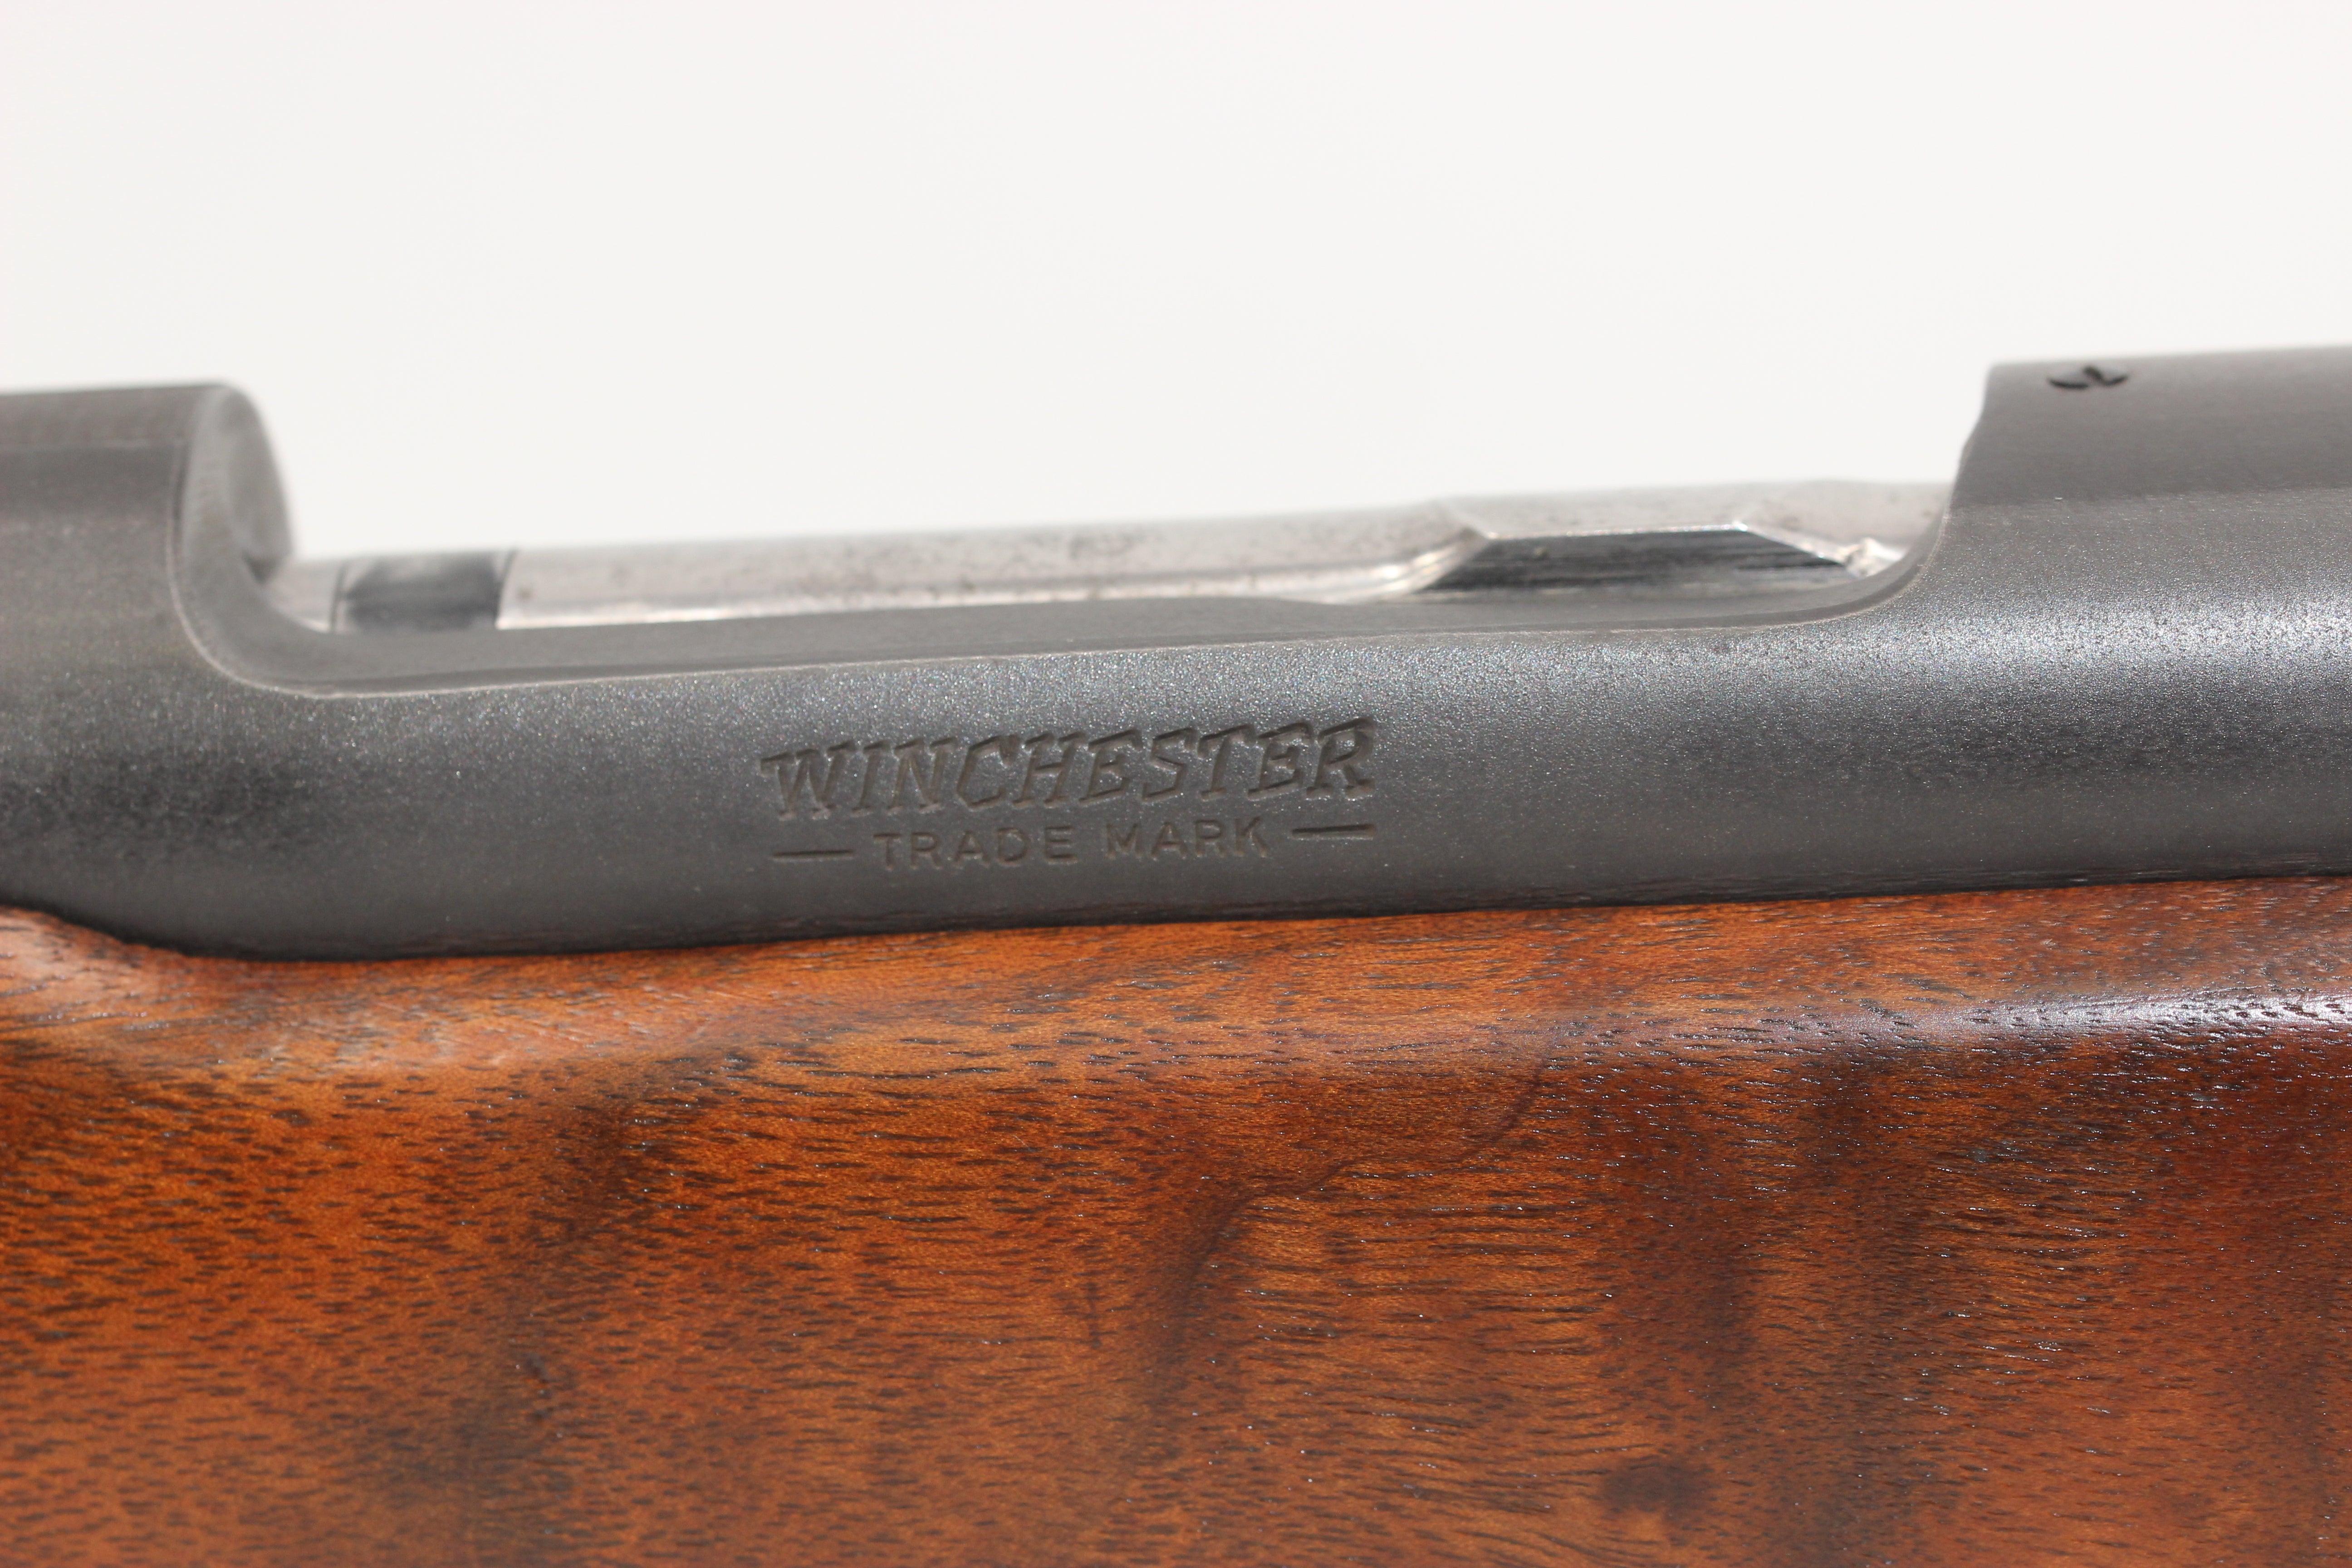 .300 Winchester Magnum "Westerner - Alaskan" Rifle - 1963